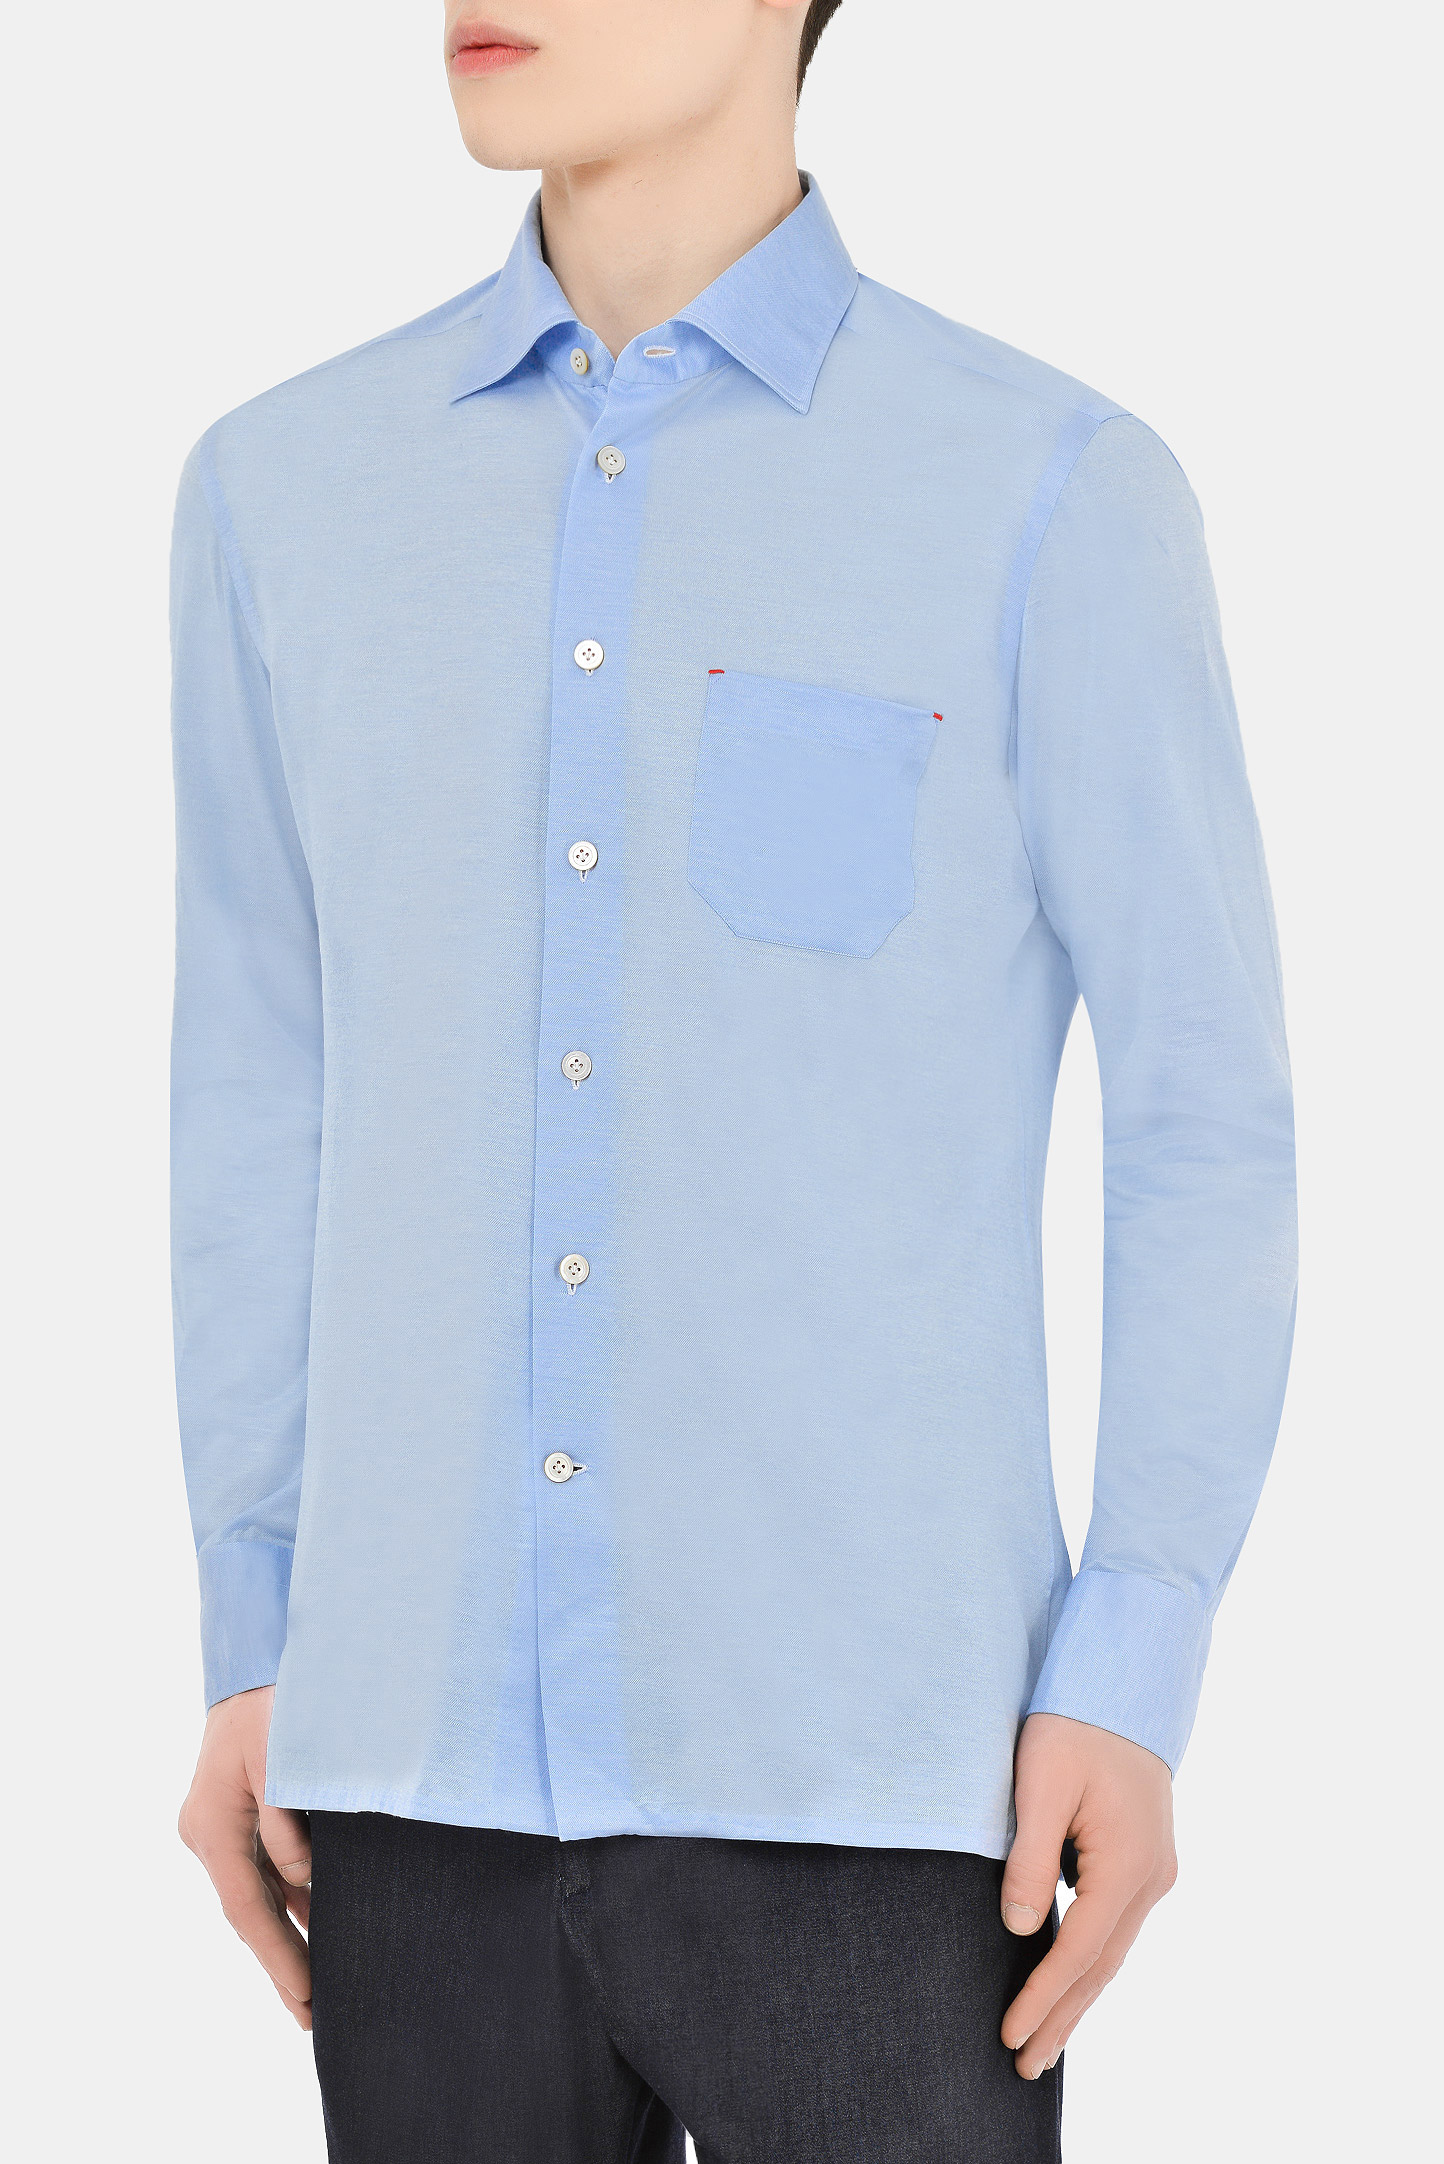 Рубашка KITON UMCNERH076090, цвет: Голубой, Мужской